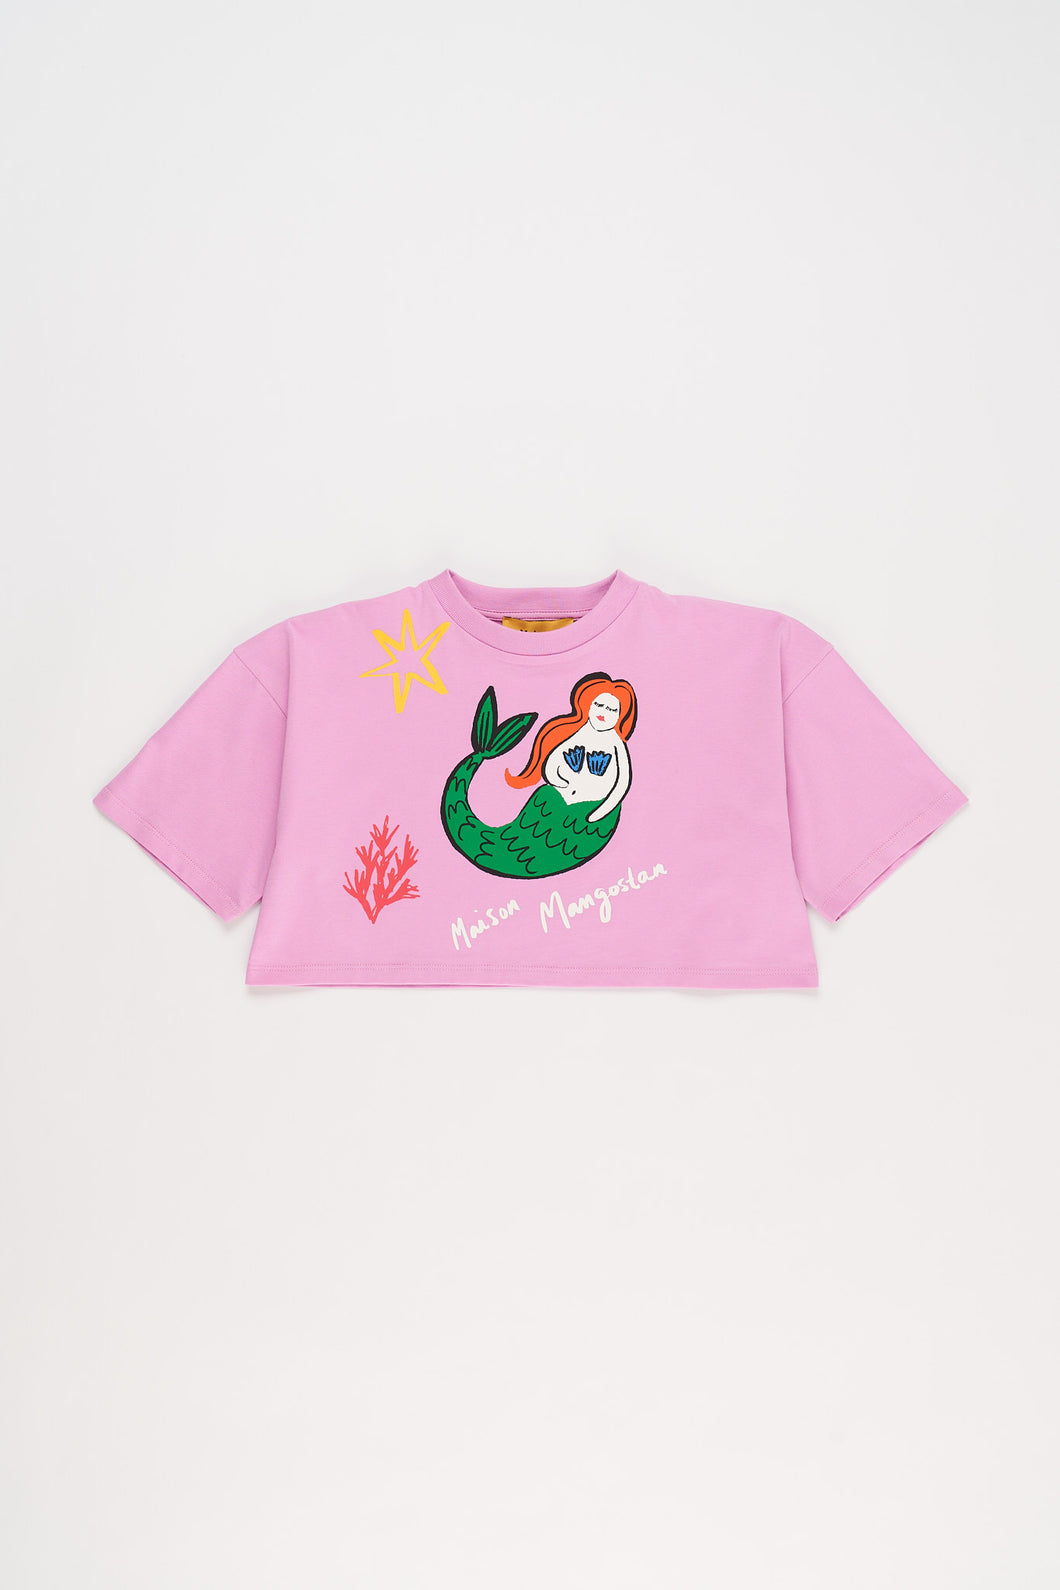 Maison Mangostan / Mermaid T-shirt / Lilac